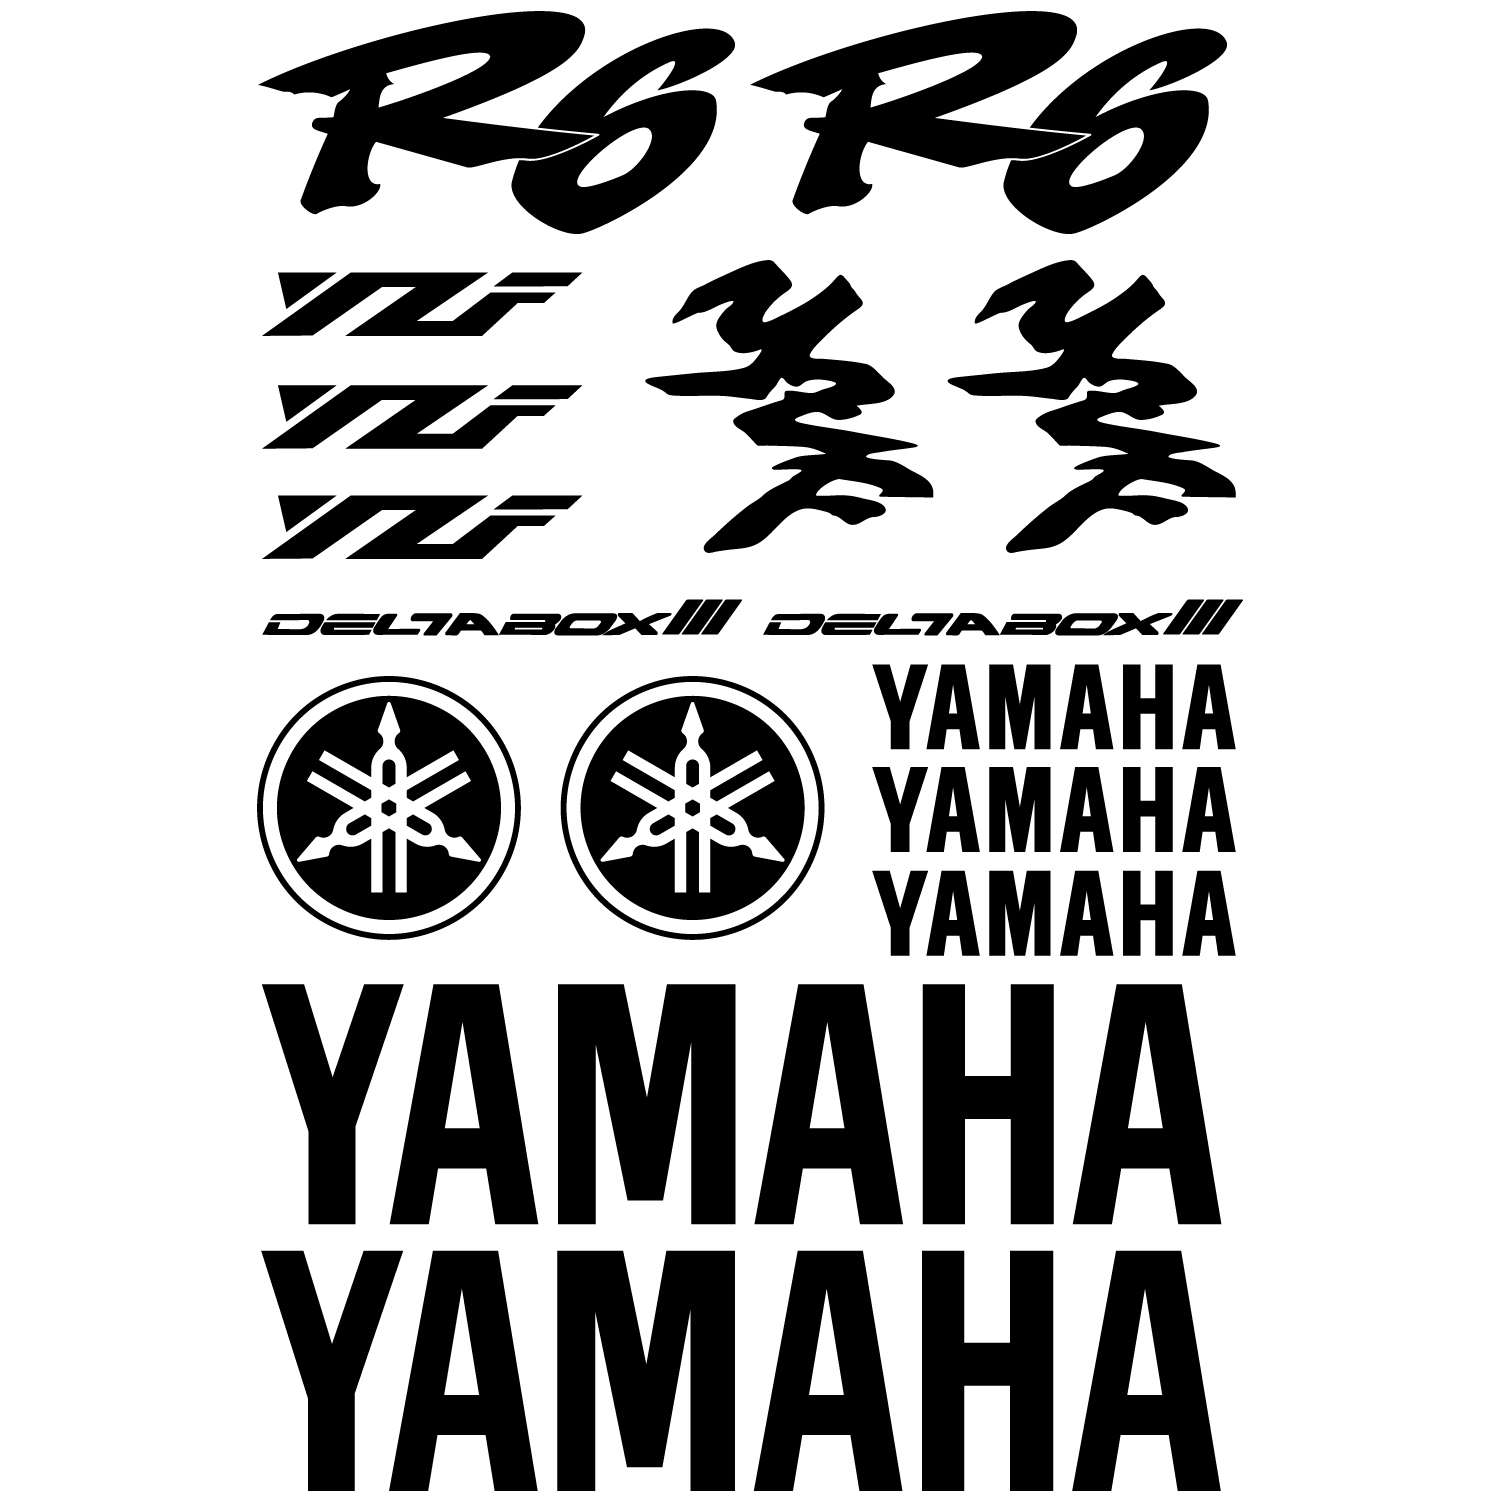 Kit de Pegatinas Troqueladas Compatible Yamaha r6 Vinilo 5 a 7 años Plata